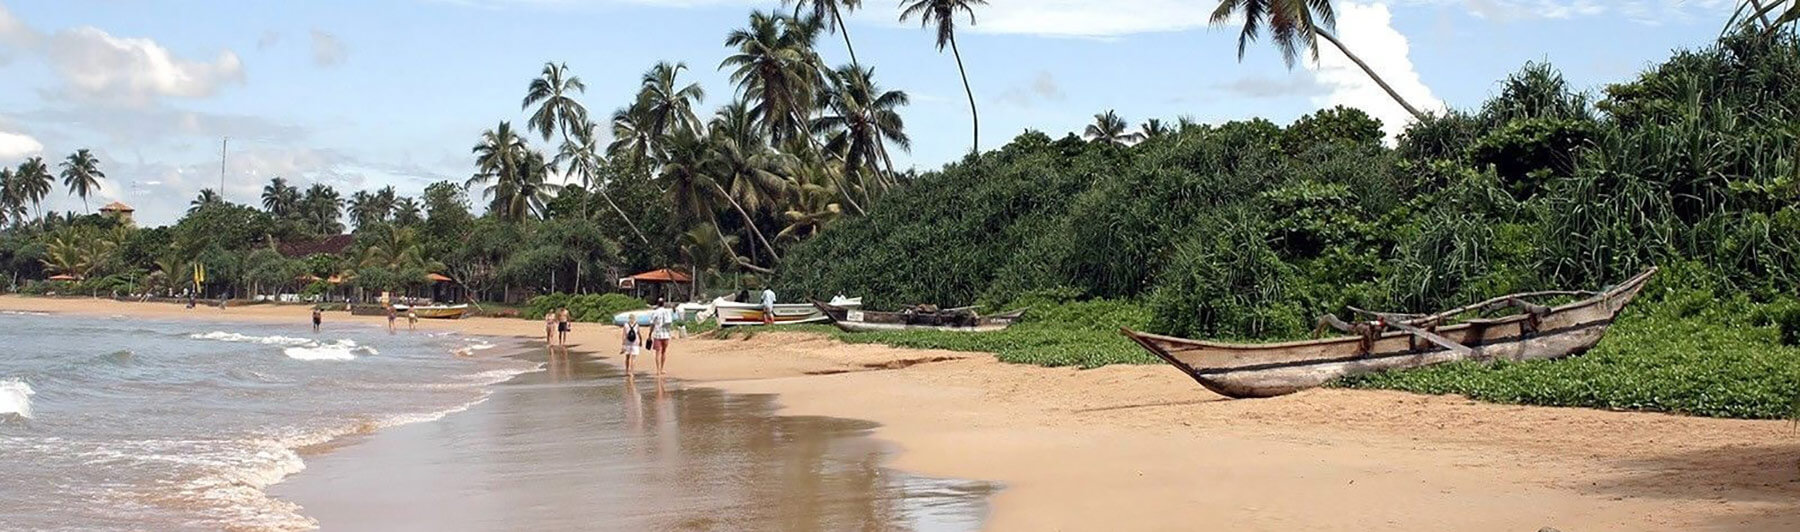 Negombo, Sri Lanka